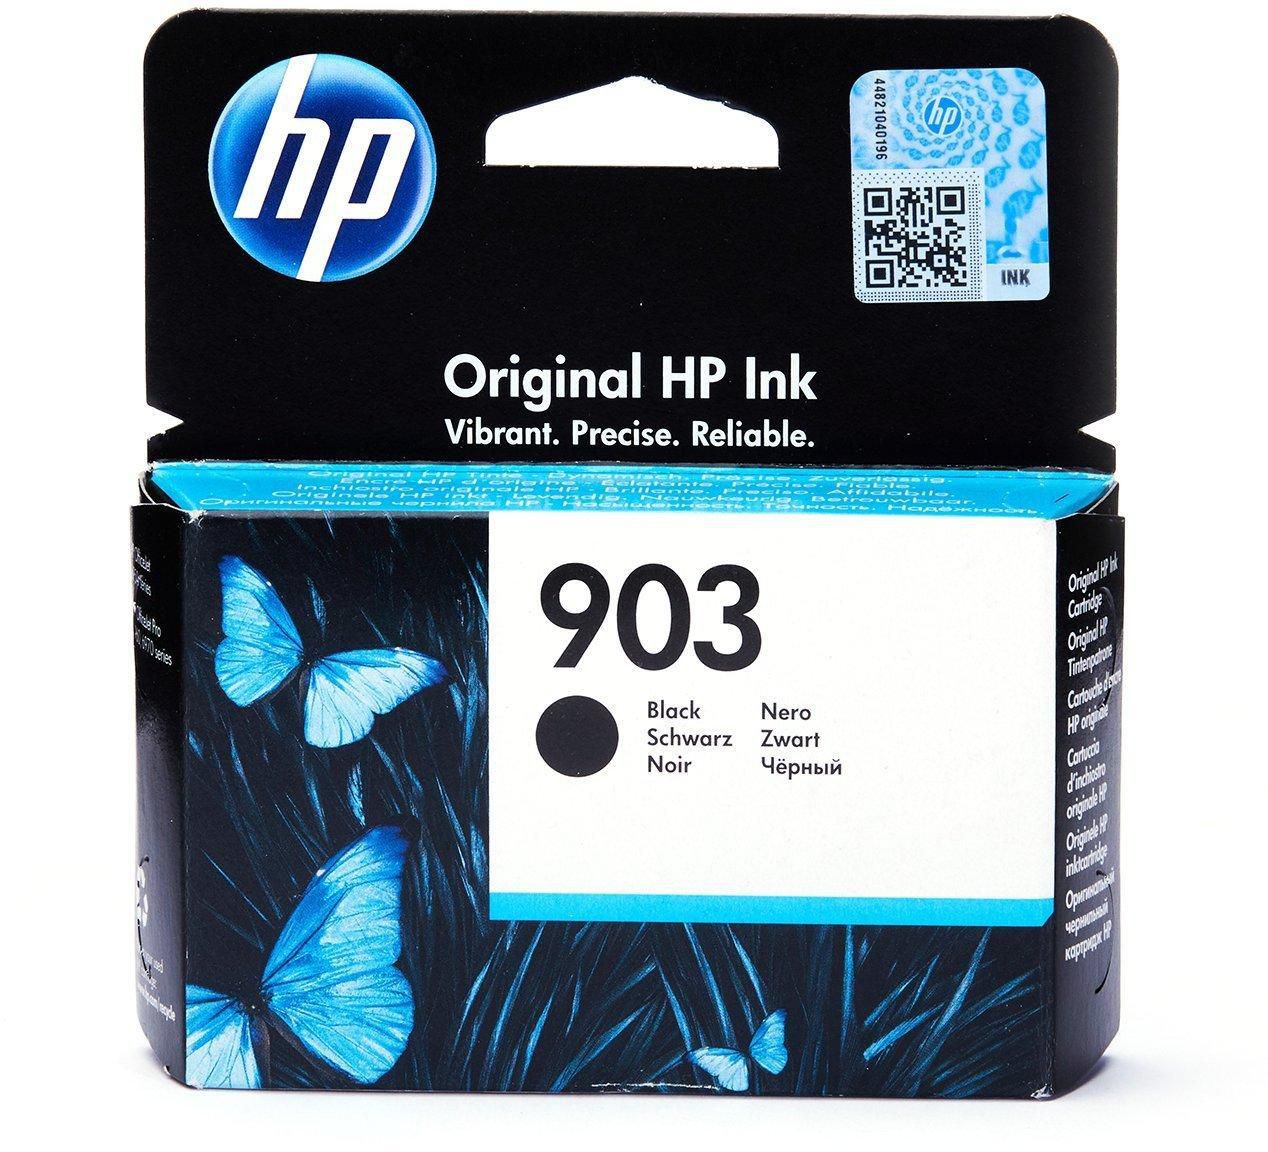 HP 903 Original Ink Cartridge, Black